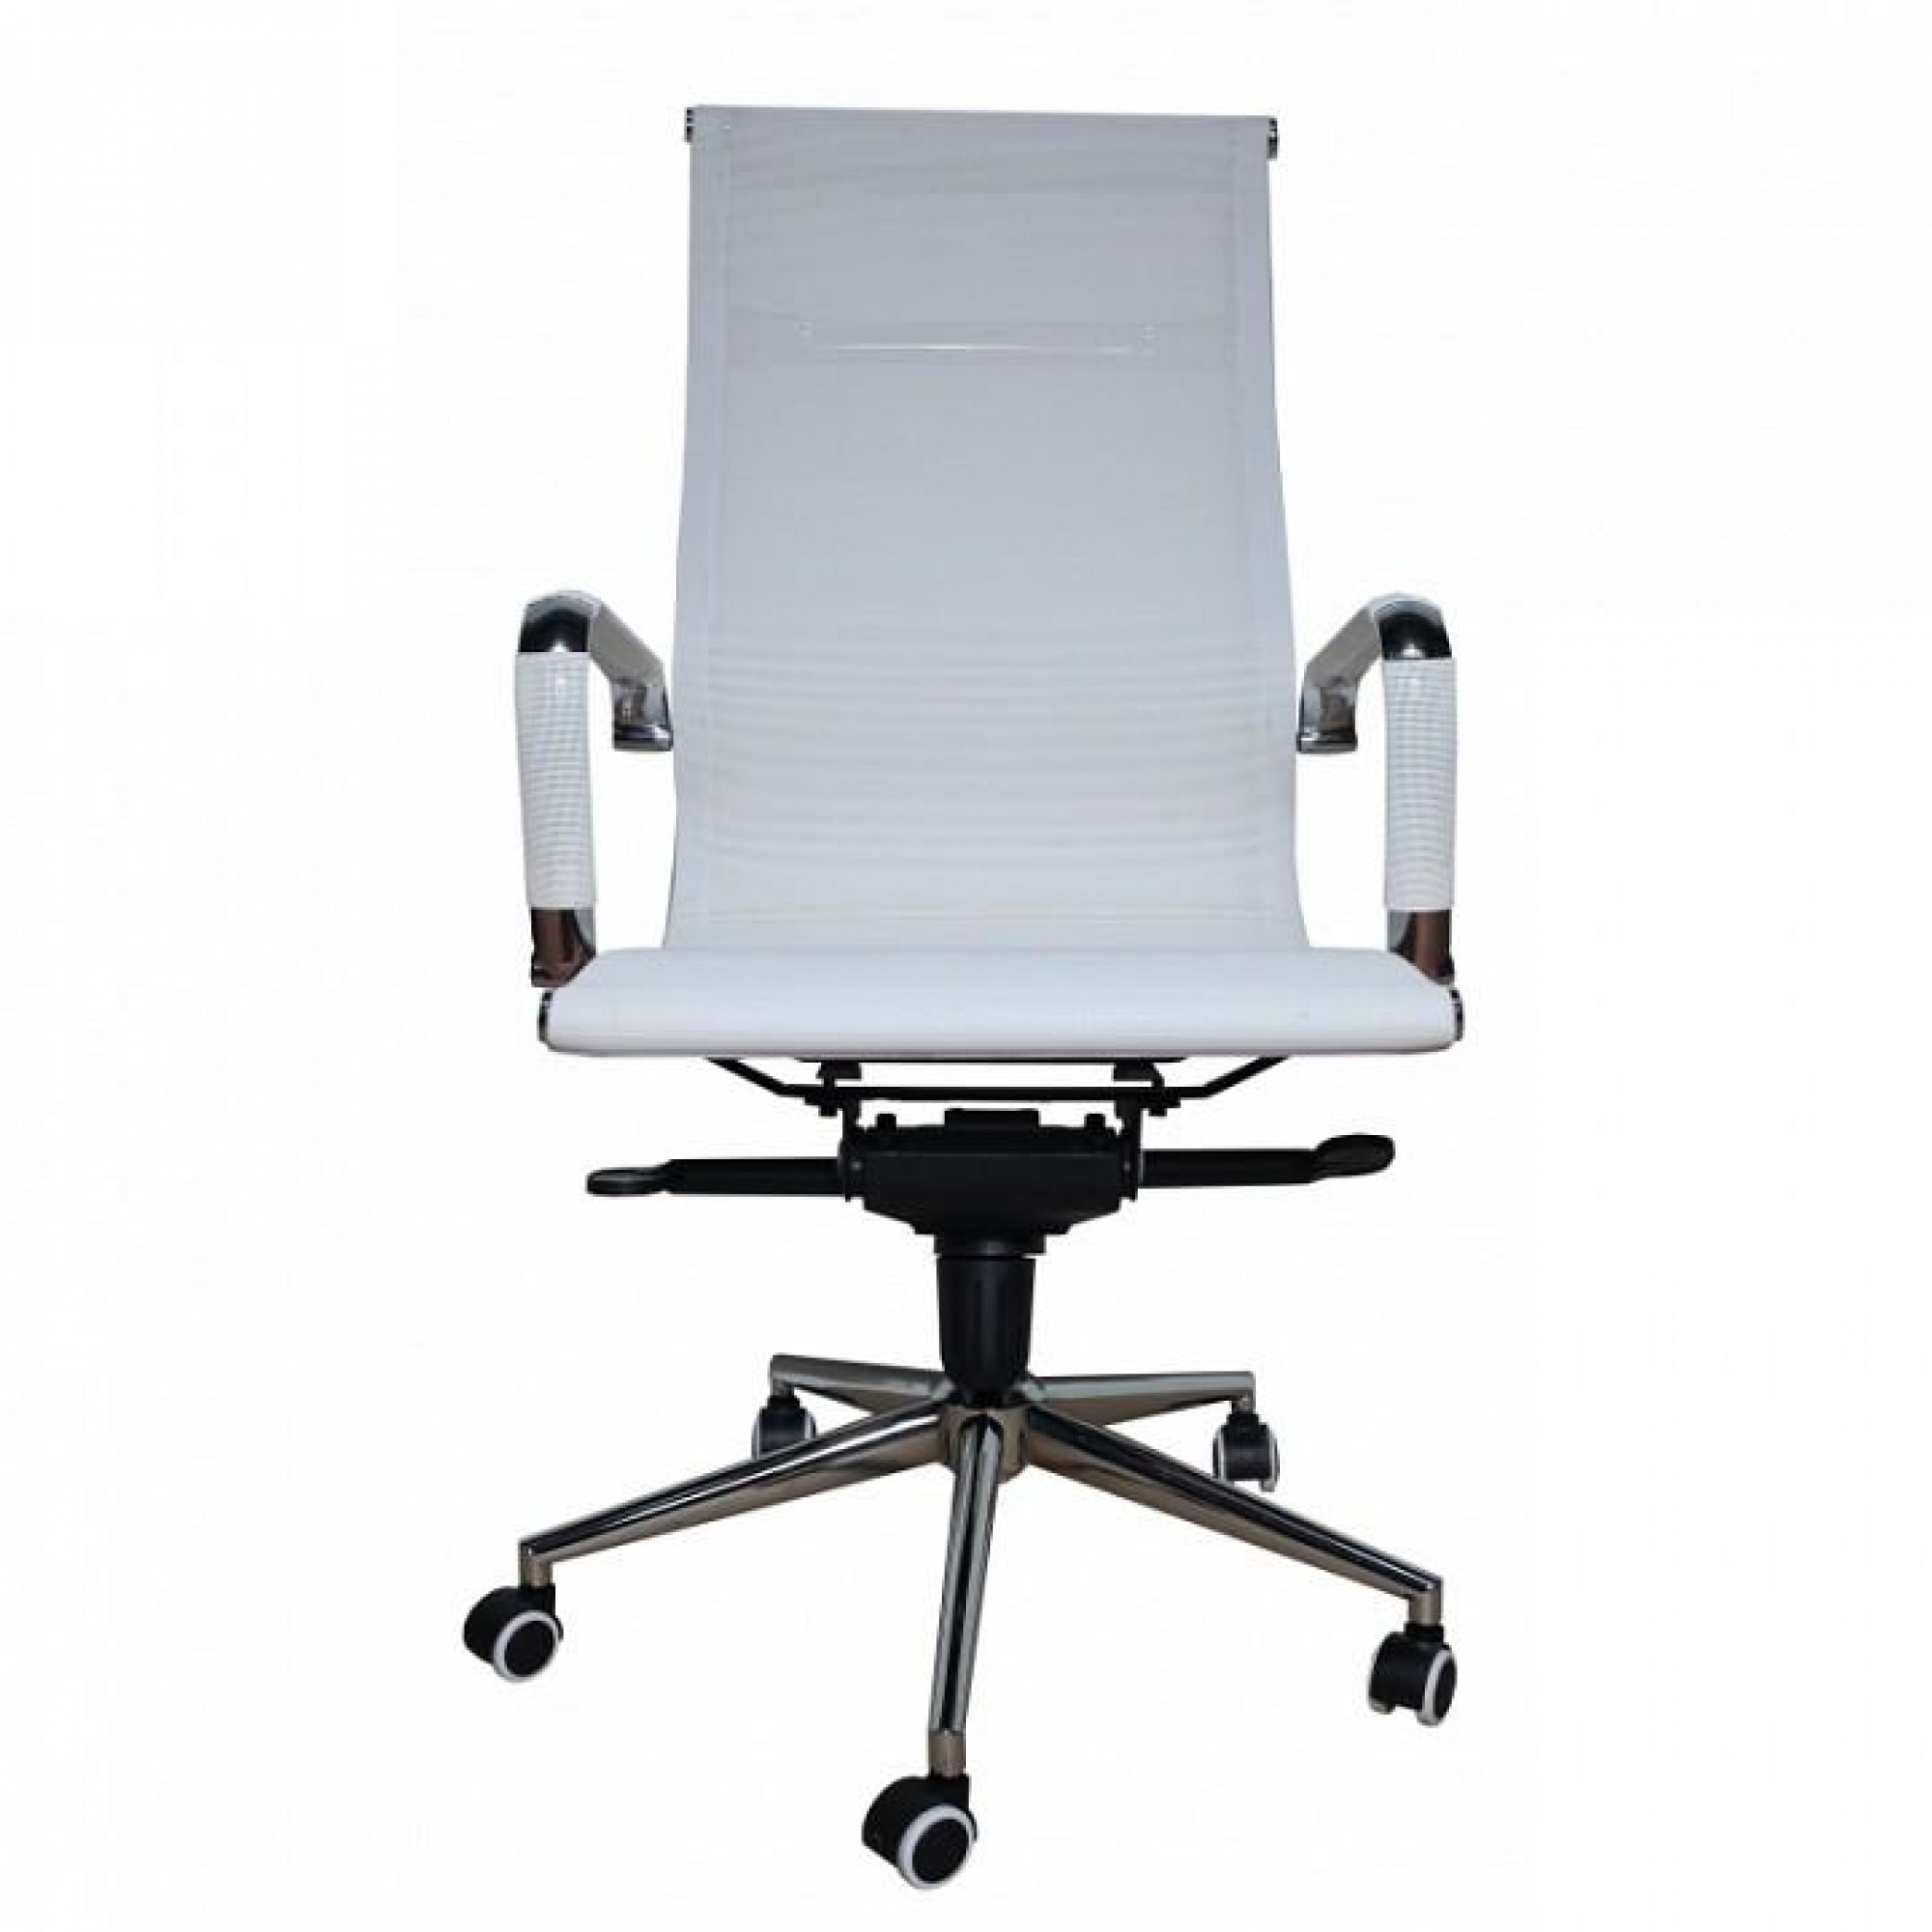 Кресло компьютерное MF-1901 белый 560x620x1100-1150(MFF_404480)